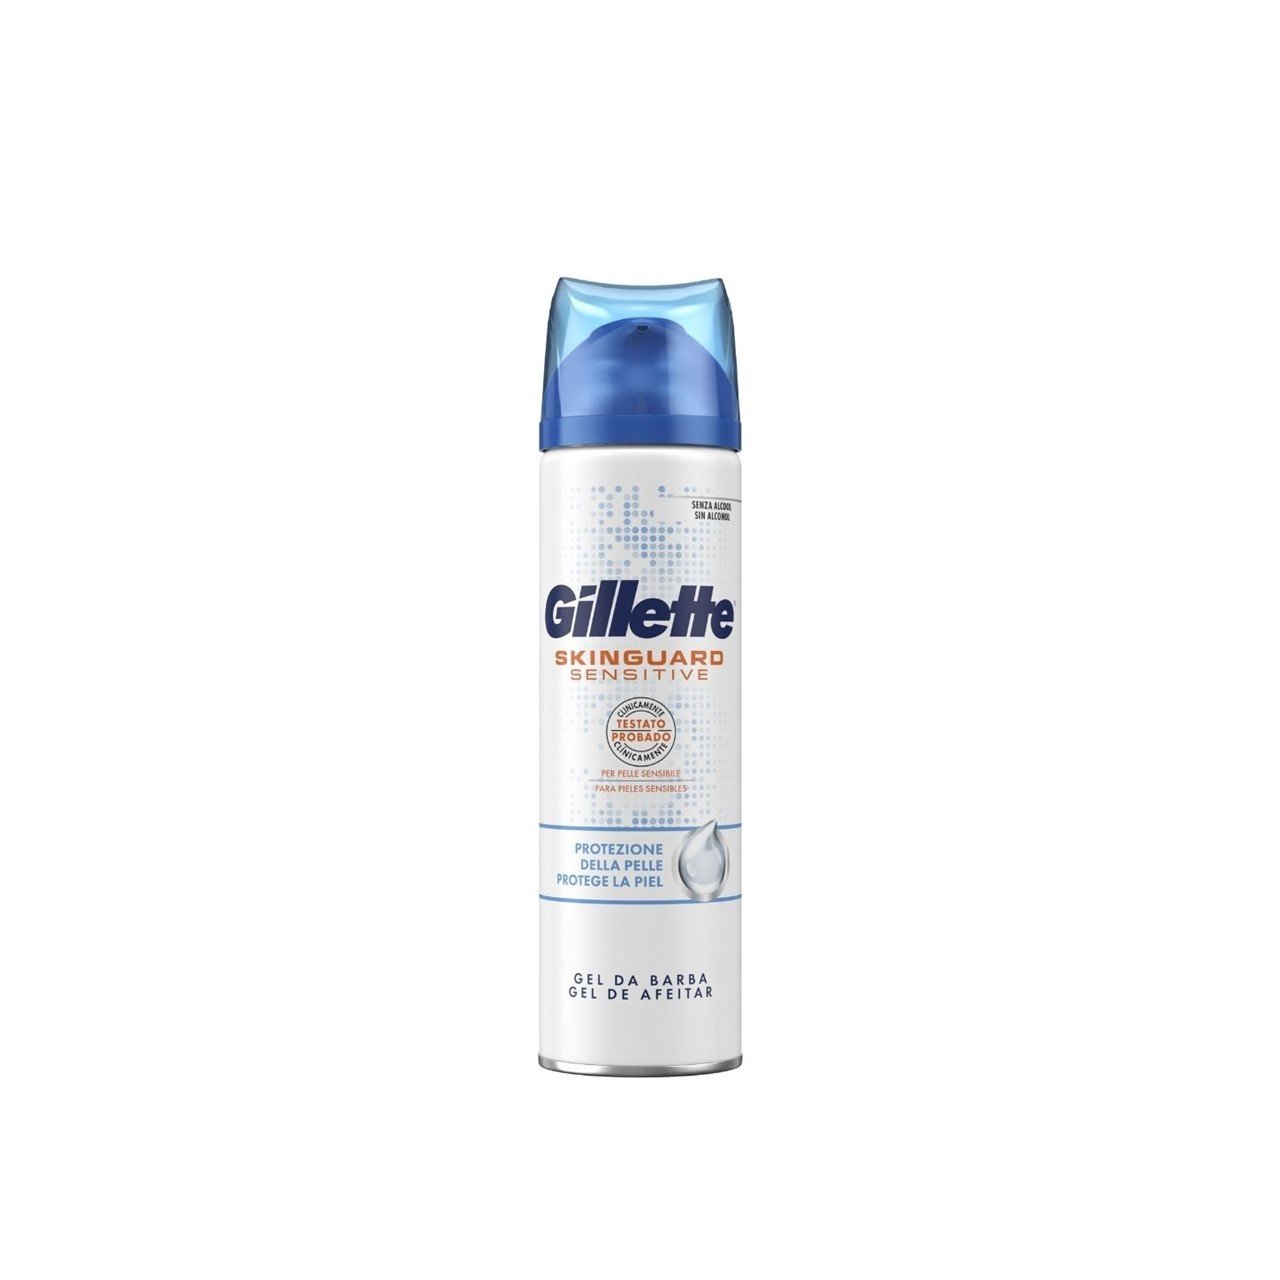 Gillette SkinGuard Sensitive Shaving Gel 200ml (6.76fl oz)